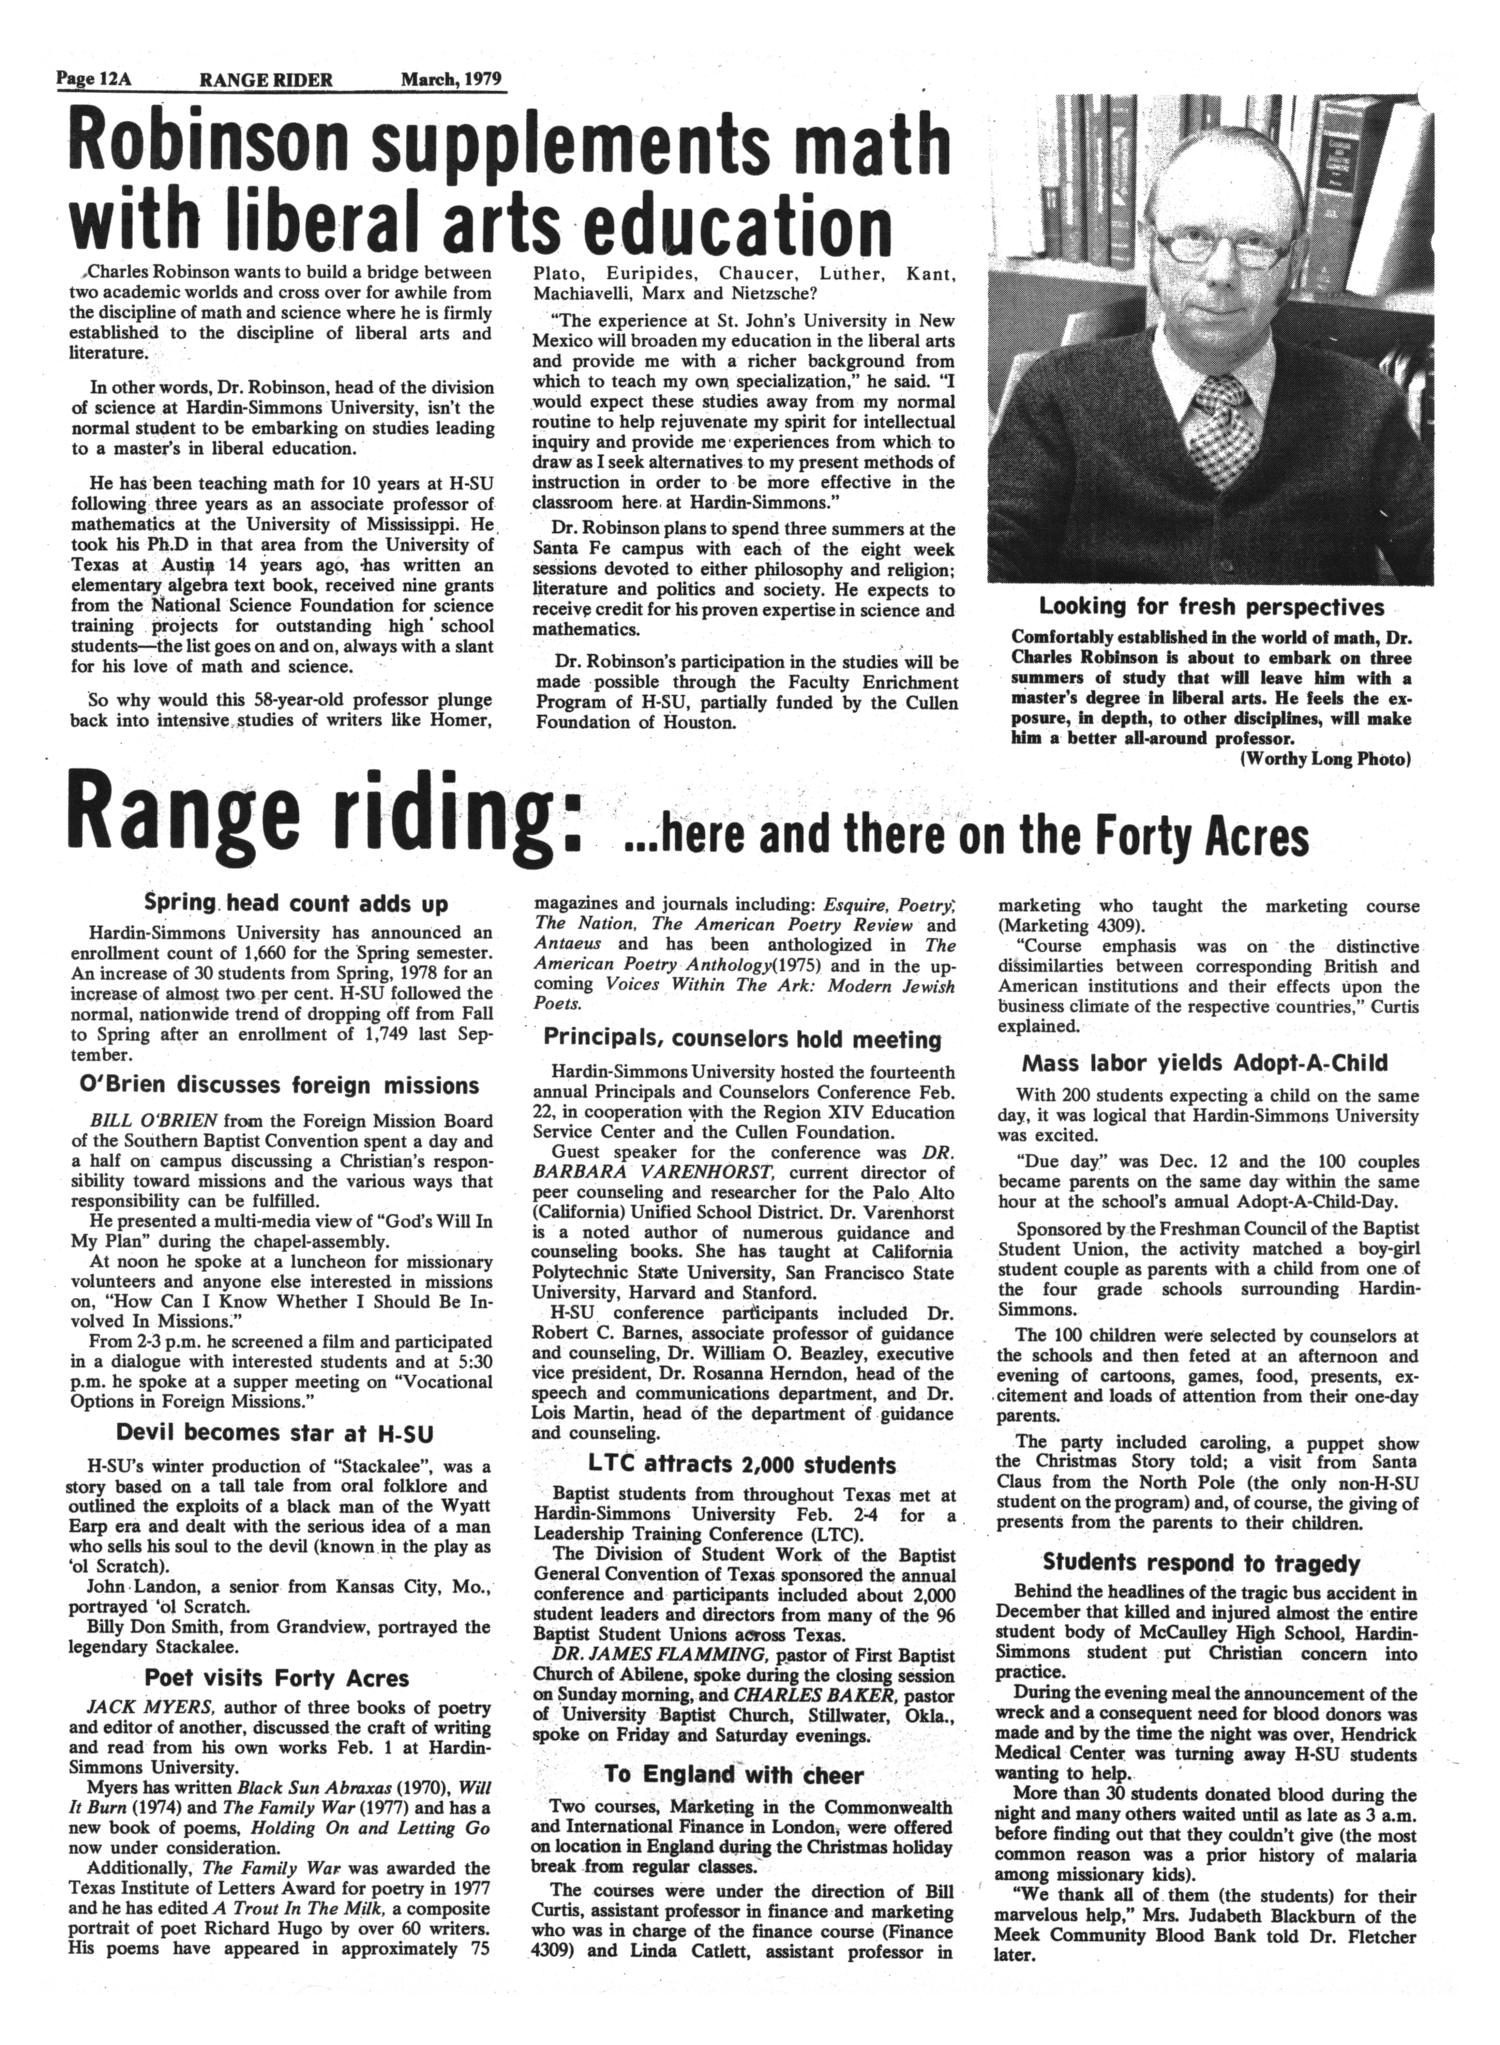 Range Rider, Volume 30, Number 1, March, 1979
                                                
                                                    12a
                                                